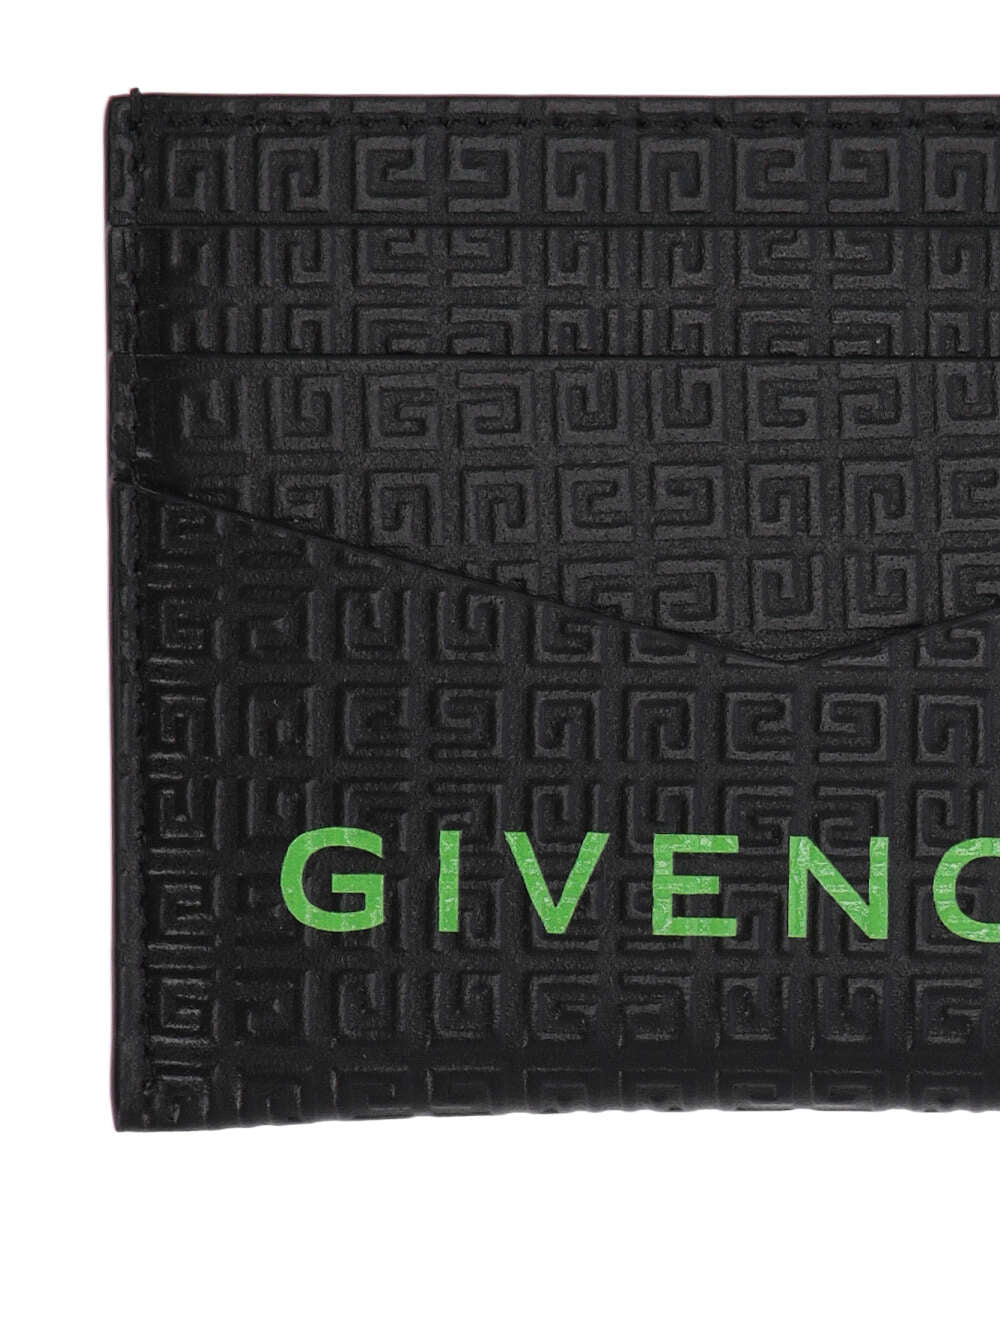 Givenchy BK6099 Man Black/green Wallets - Zuklat